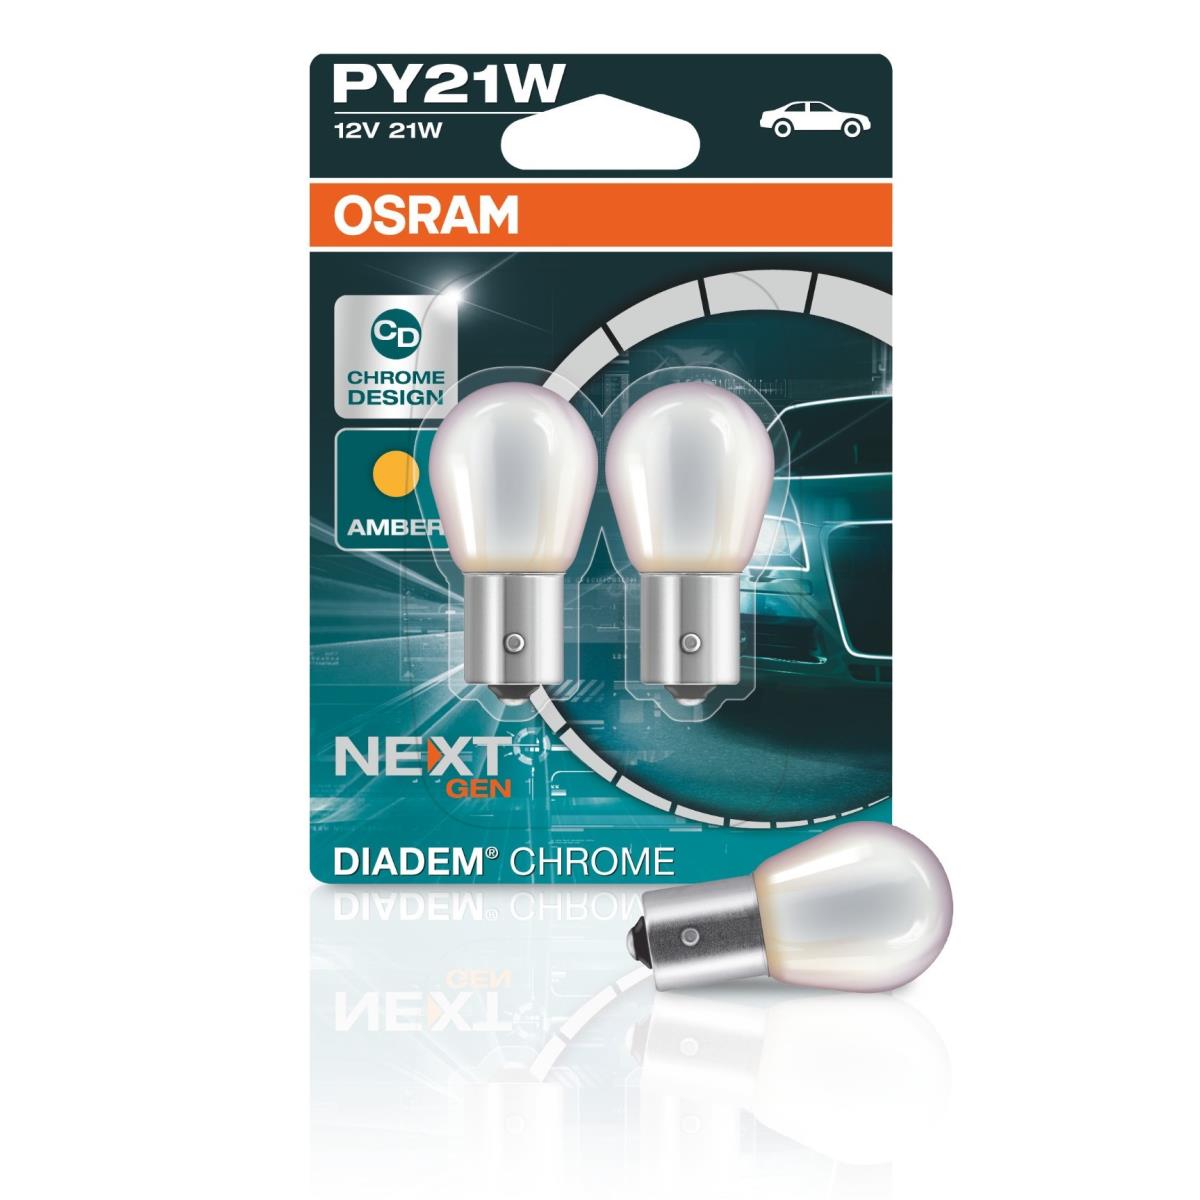 OSRAM Diadem Chrome Set Blinker Lampe Birne 2x PY21W 12V 21W BAU15s